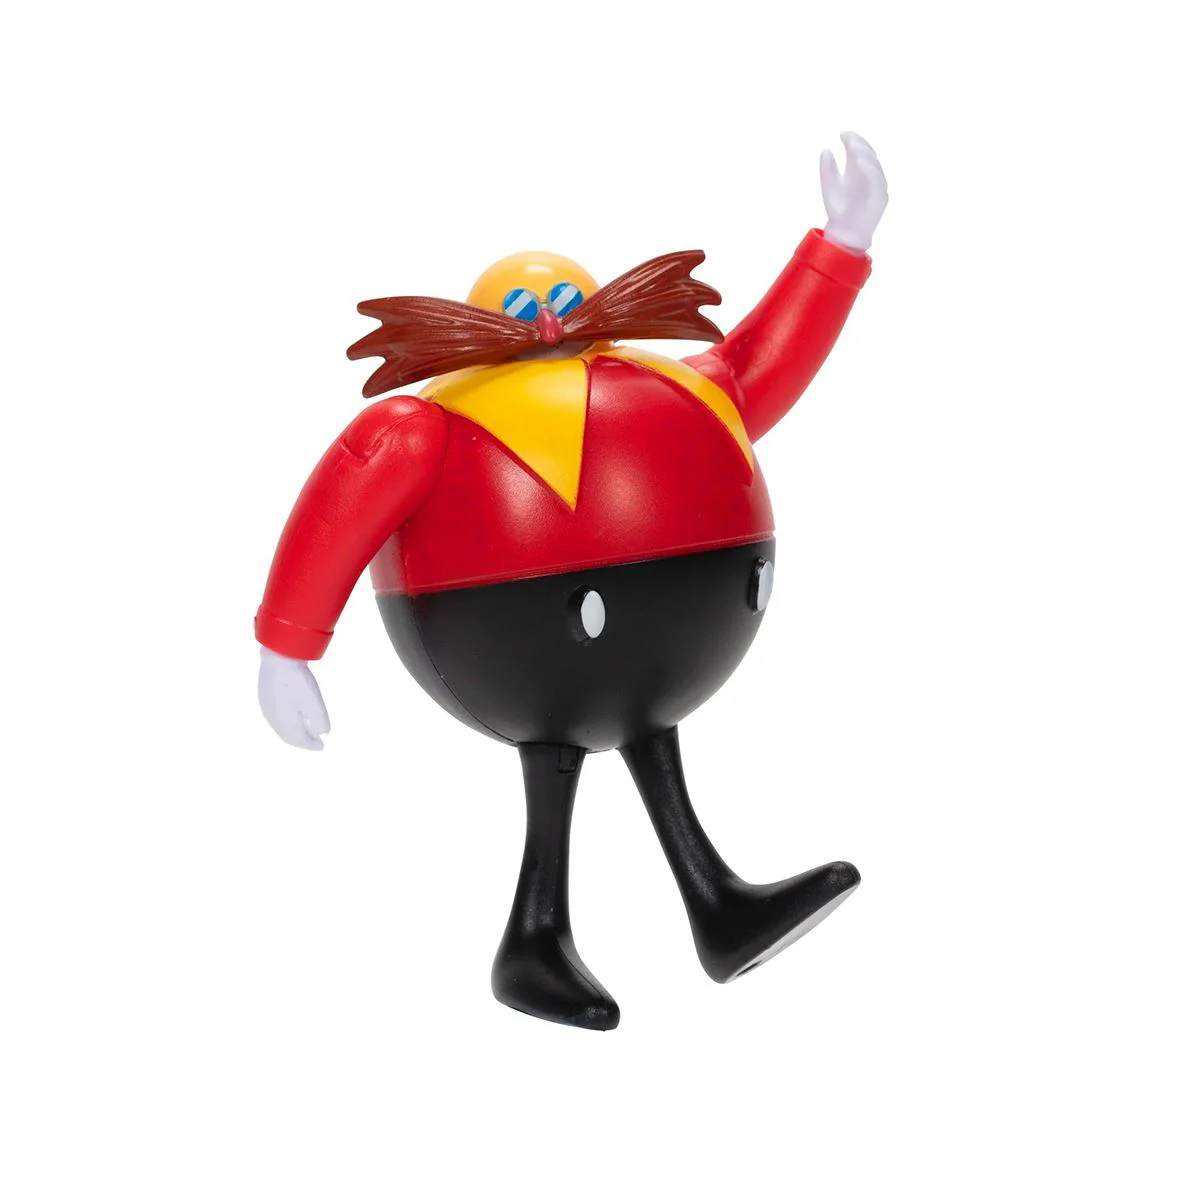 Figurina cu articulatii Sonic the Hedgehog Dr. Eggman, 6 cm